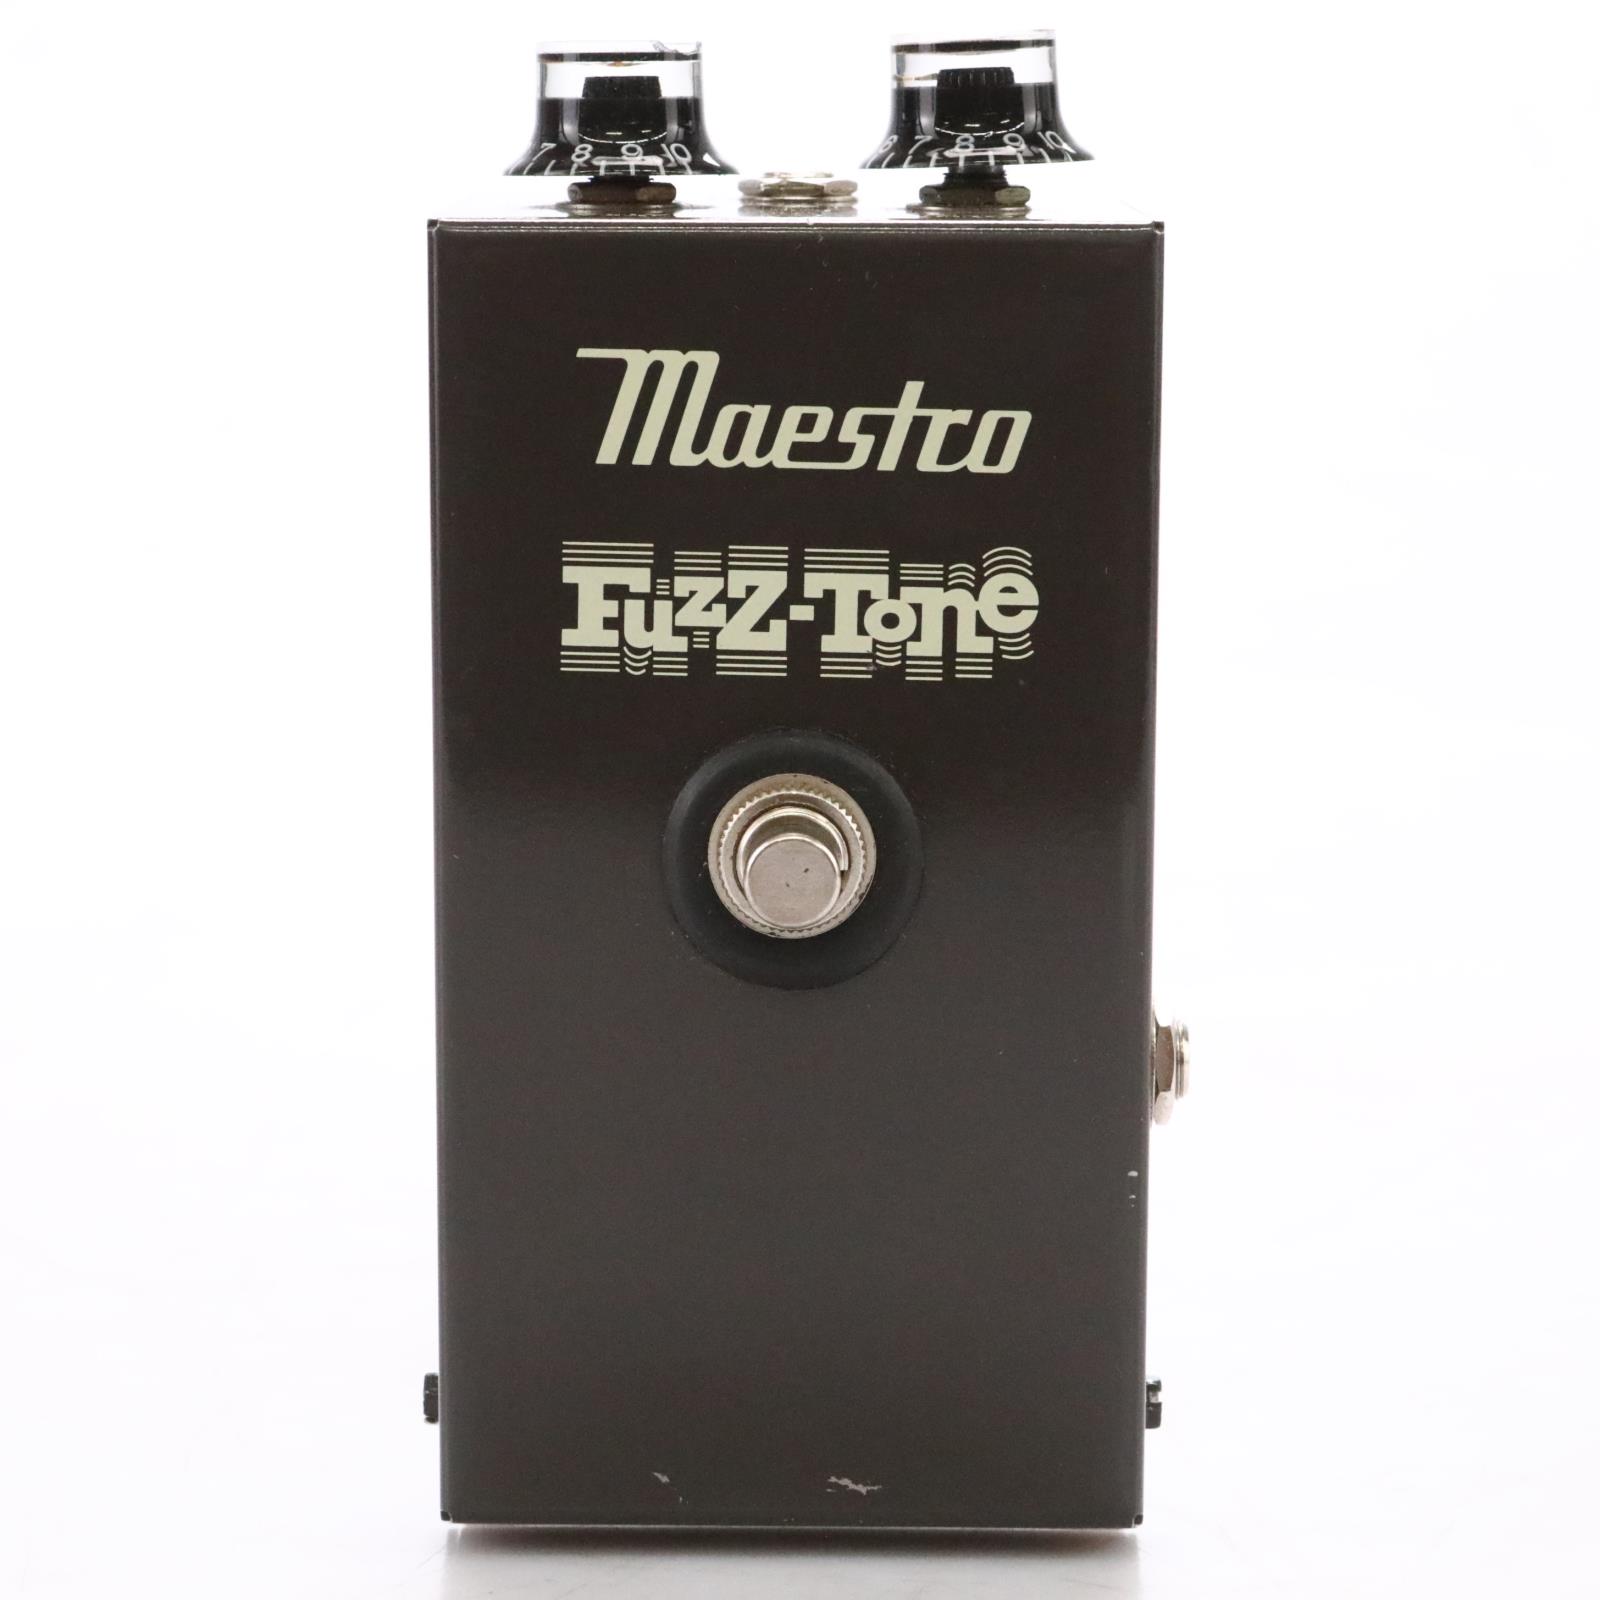 Maestro Gibson Fuzz-Tone FZ-1A Fuzz Reissue Guitar Effects Pedal #50394